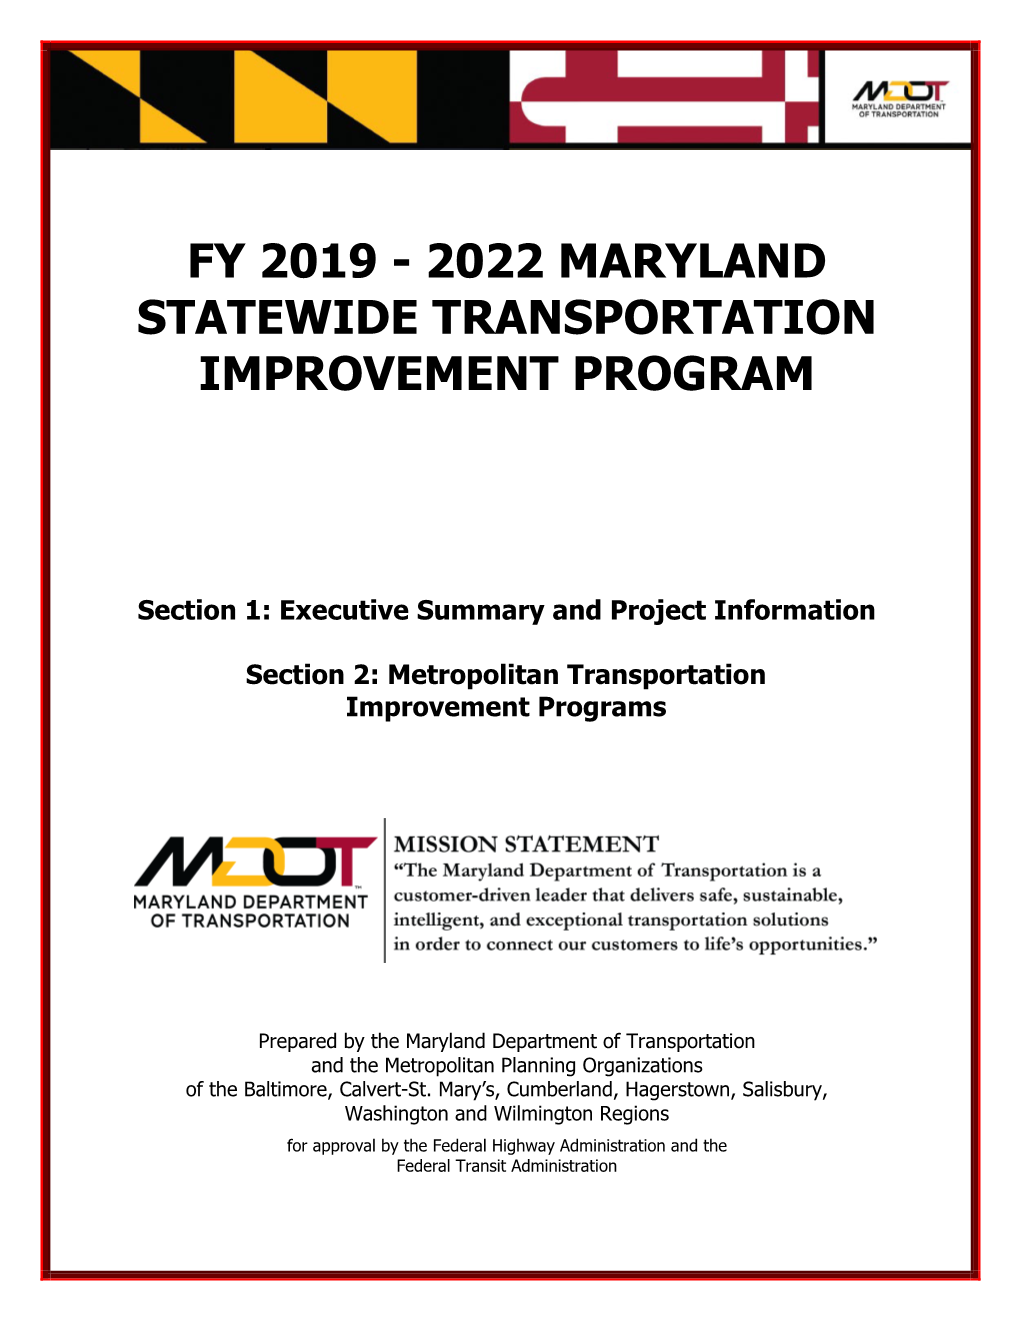 Fy 2019 - 2022 Maryland Statewide Transportation Improvement Program